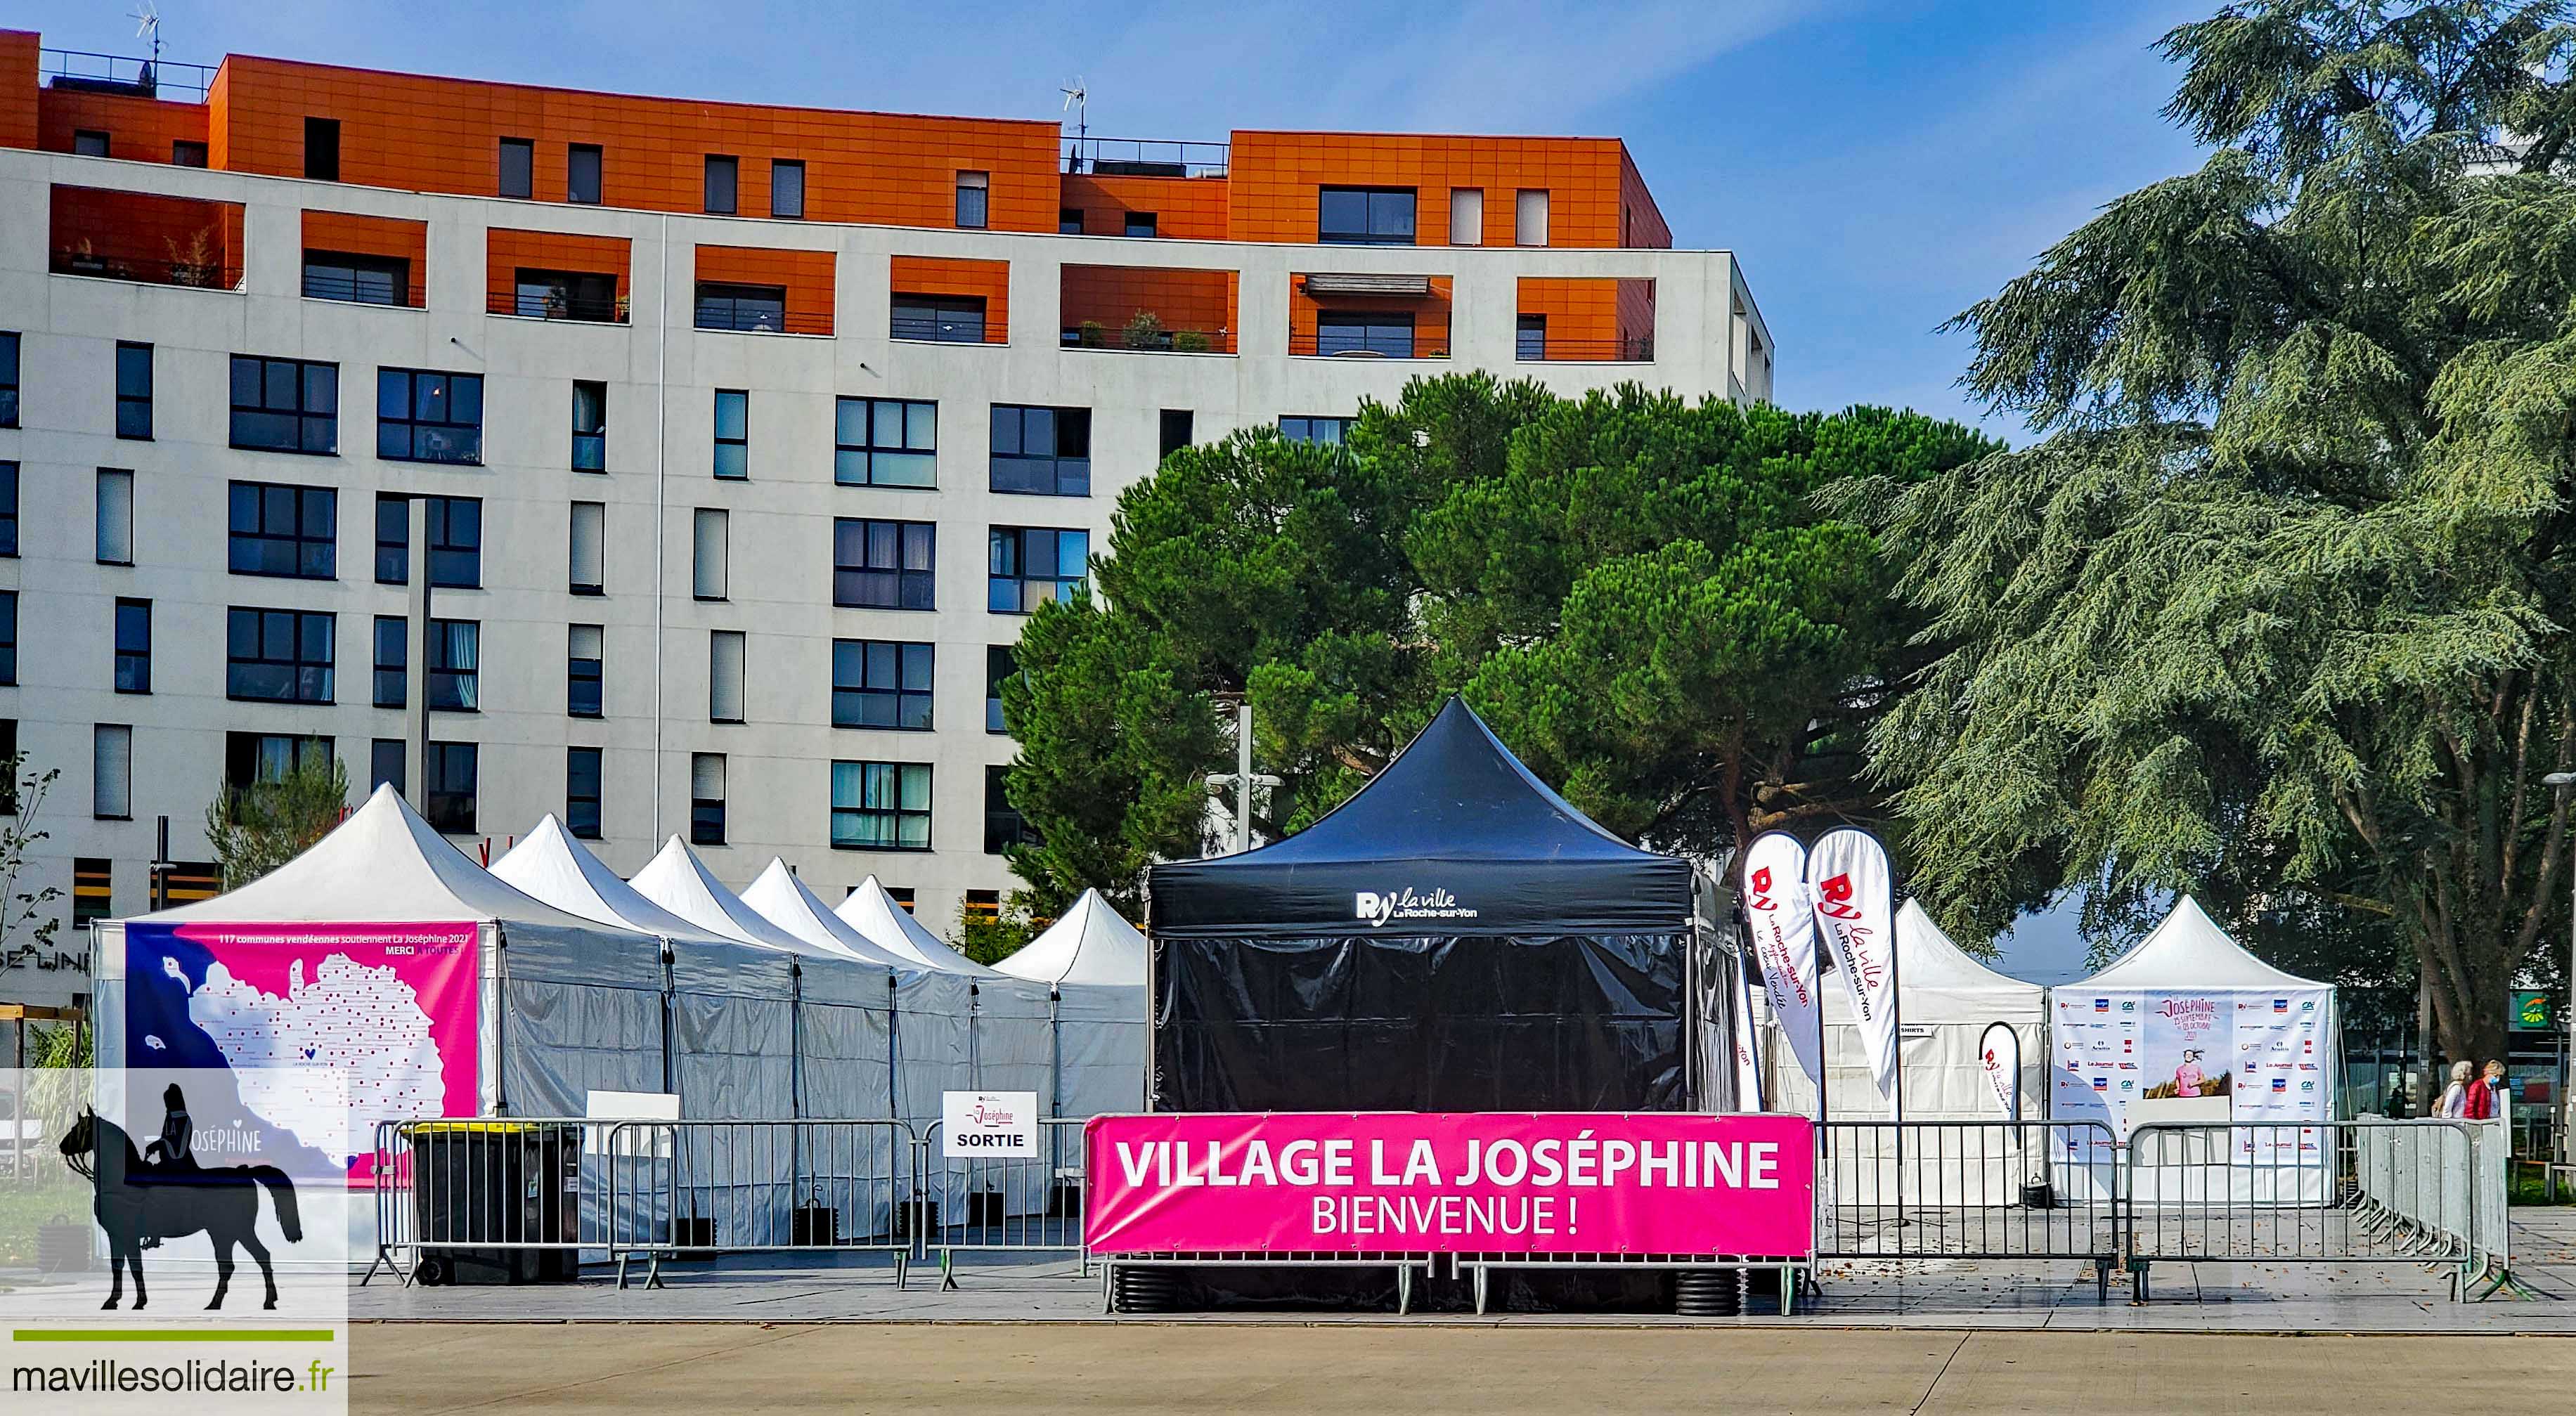 VILLAGE LA JOSEPHINE 2021 La Roche sur Yon mavillesolidaire.fr 